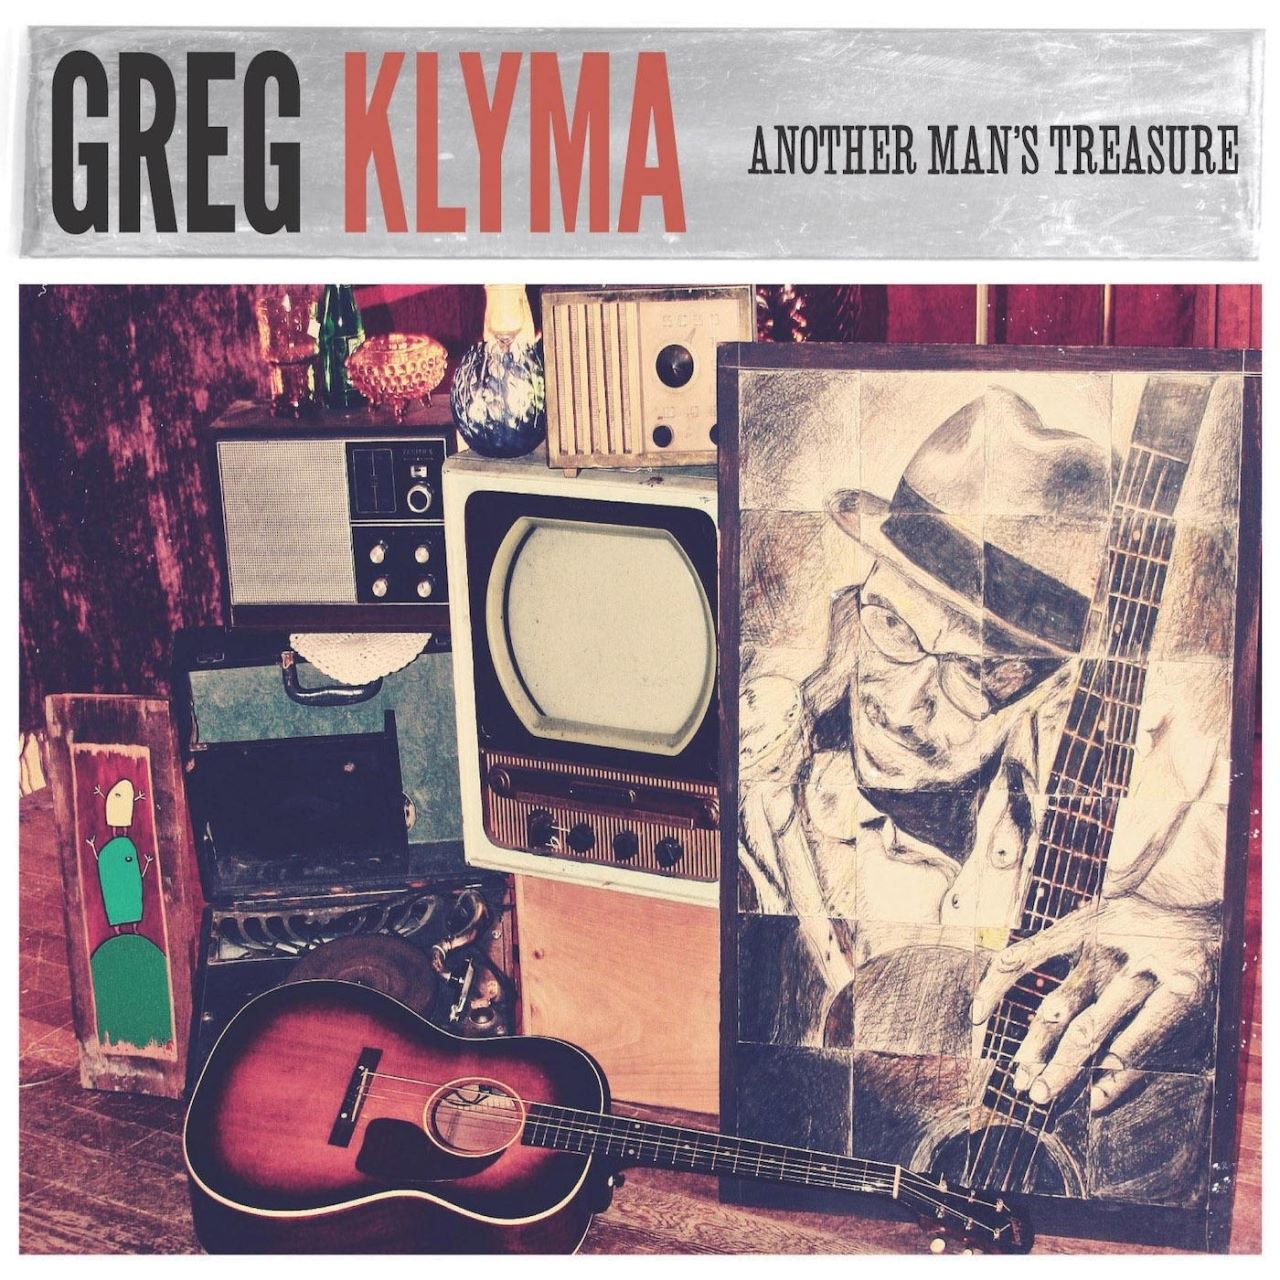 Greg Klyma - Another Man’s Treasure cover album